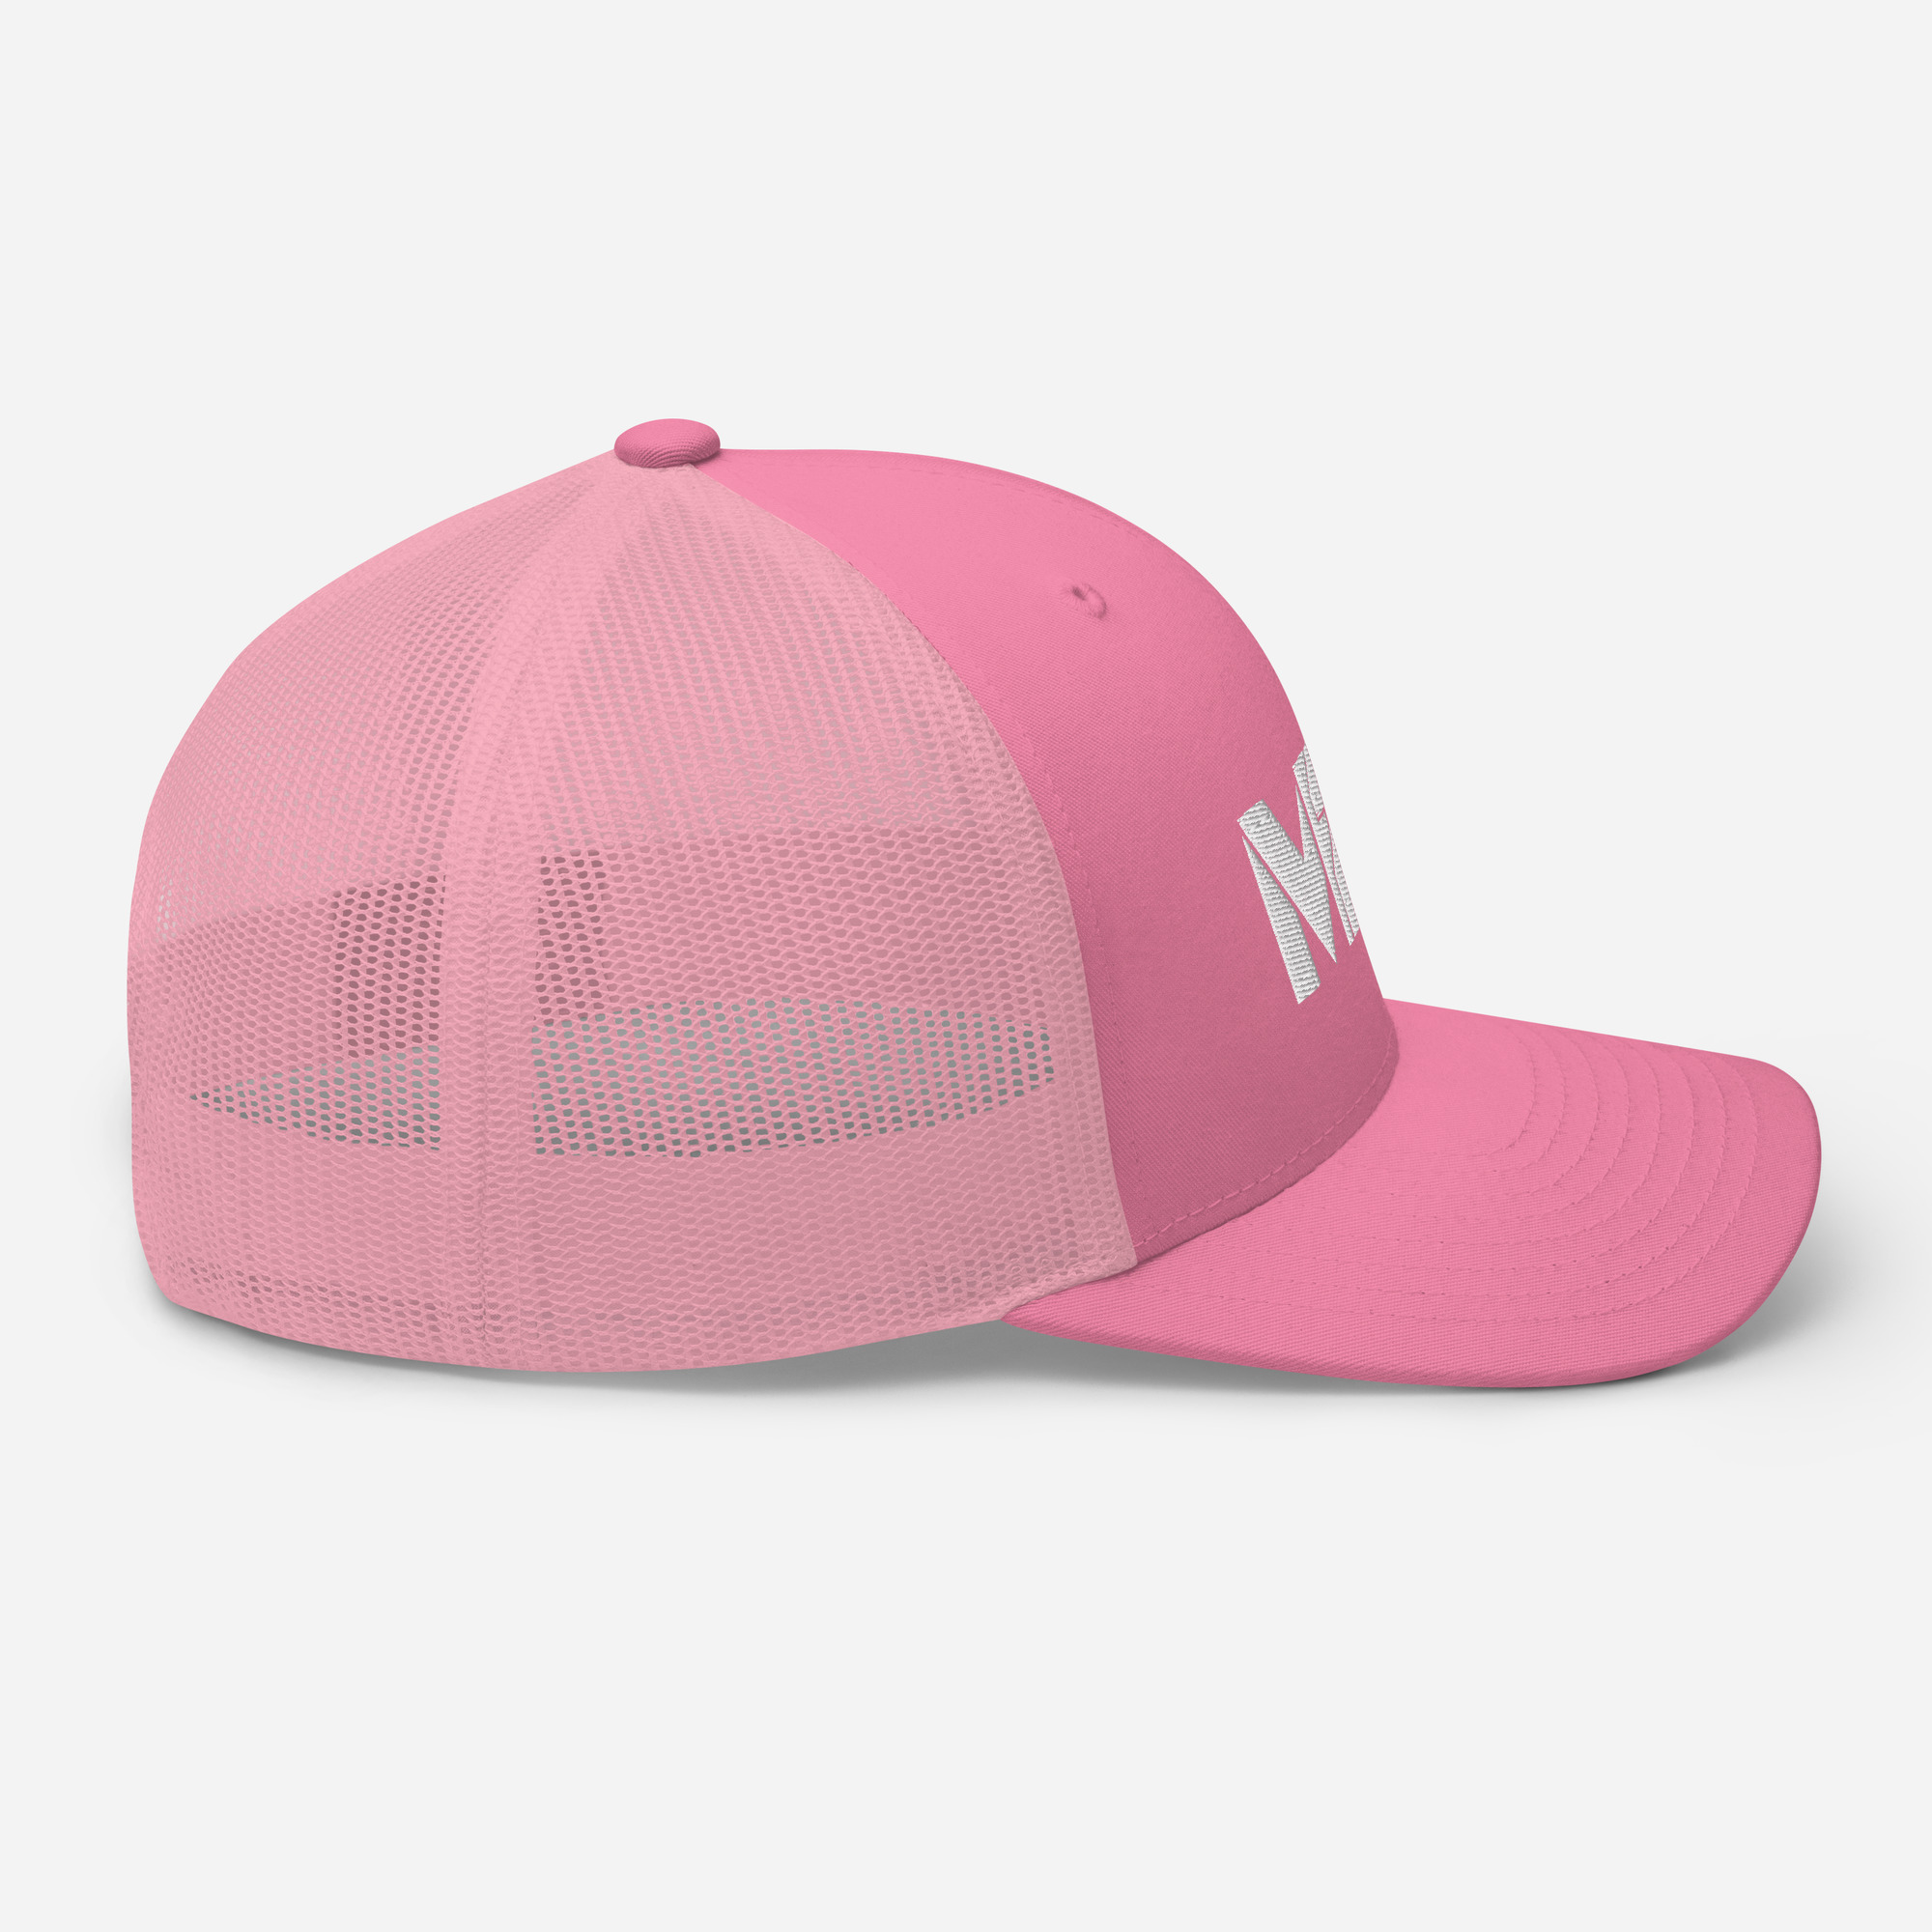 retro-trucker-hat-pink-right-6316911a28765.jpg